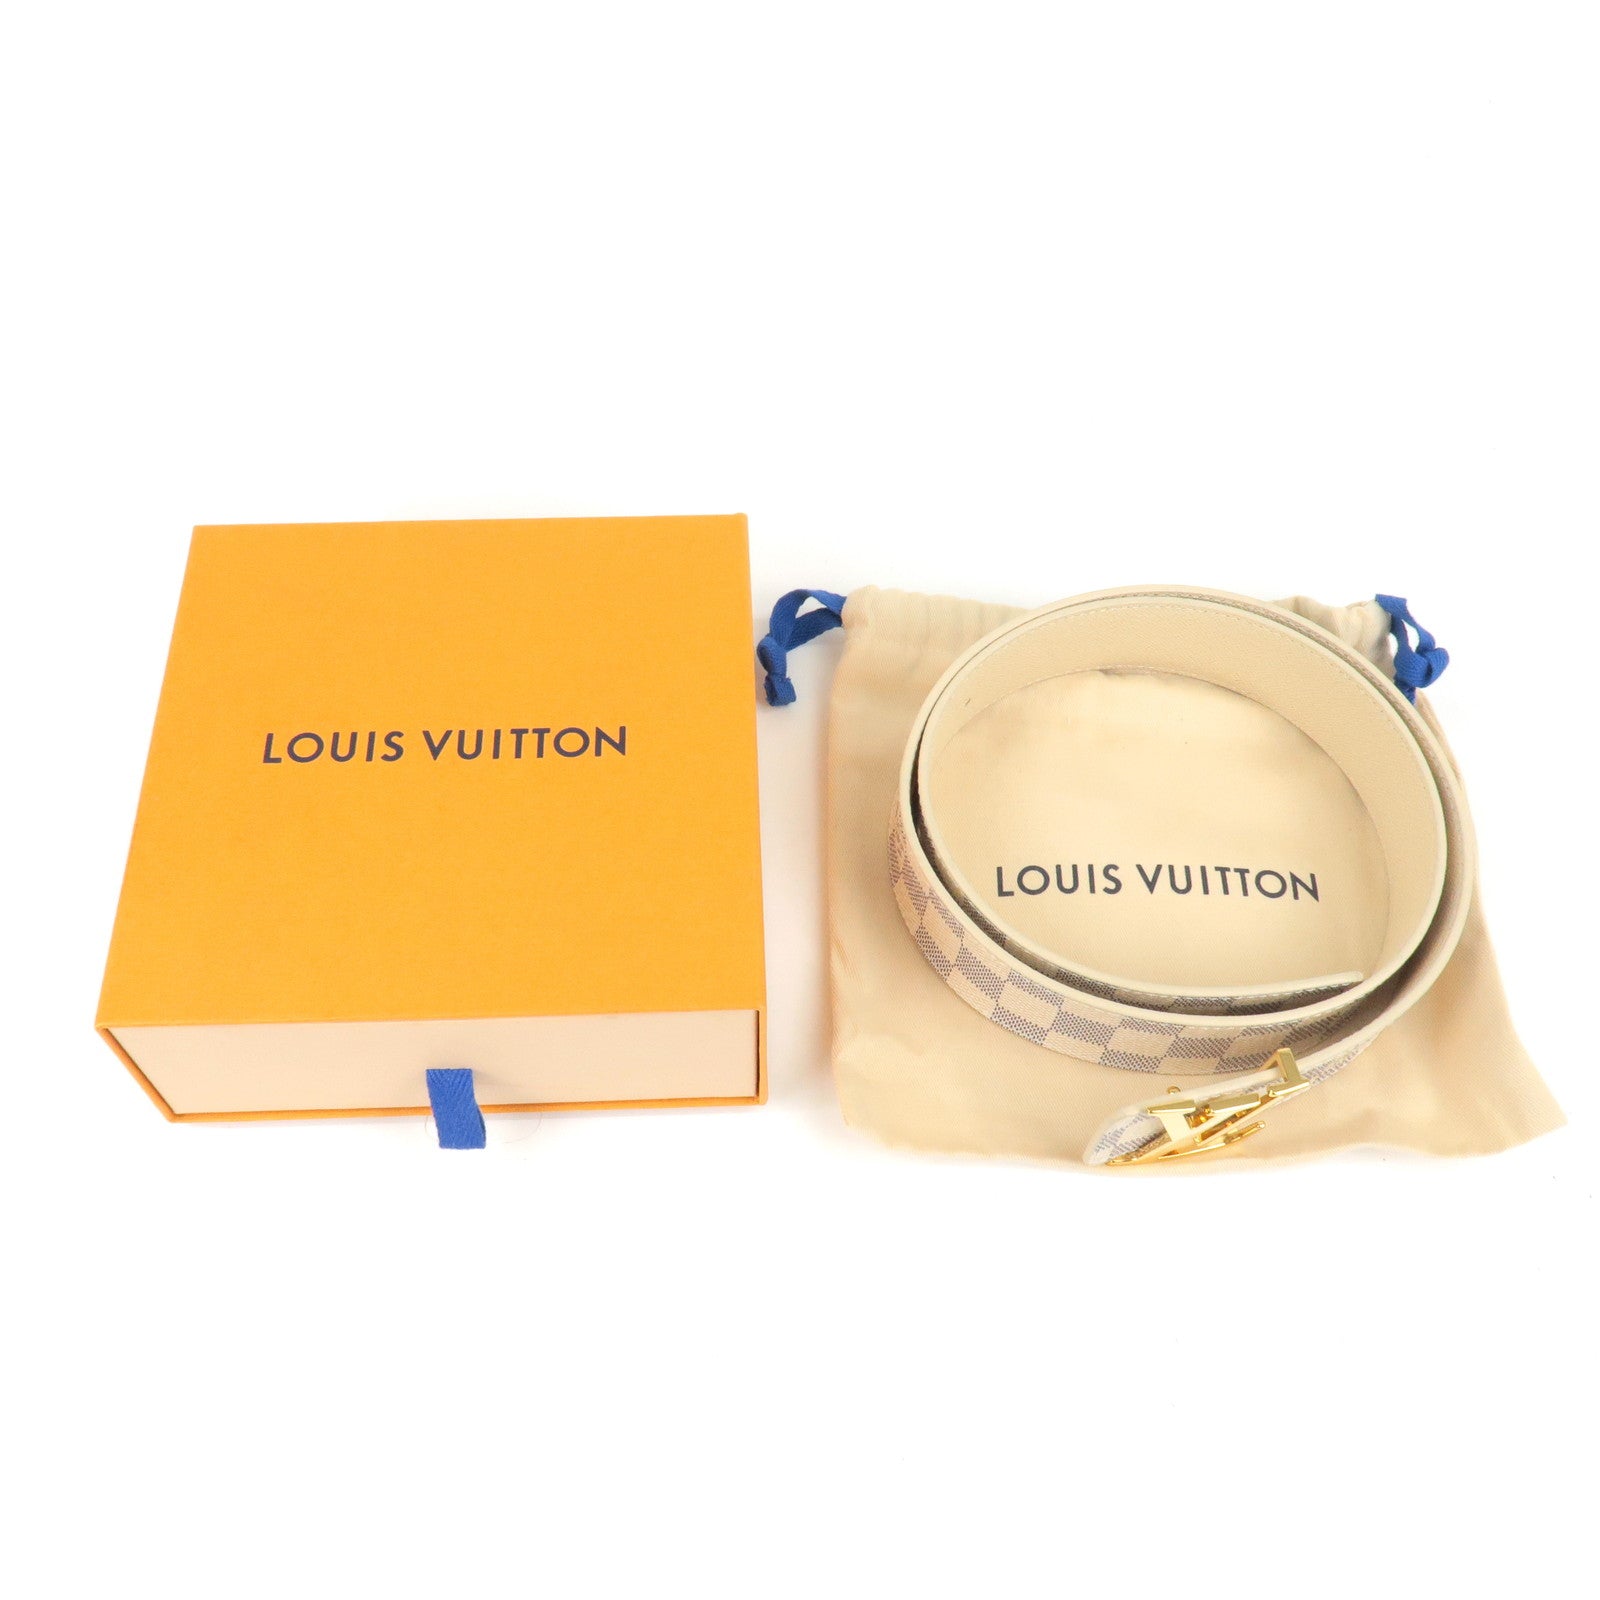 LOUIS VUITTON Beige Leather So LV Cuff Bracelet 17